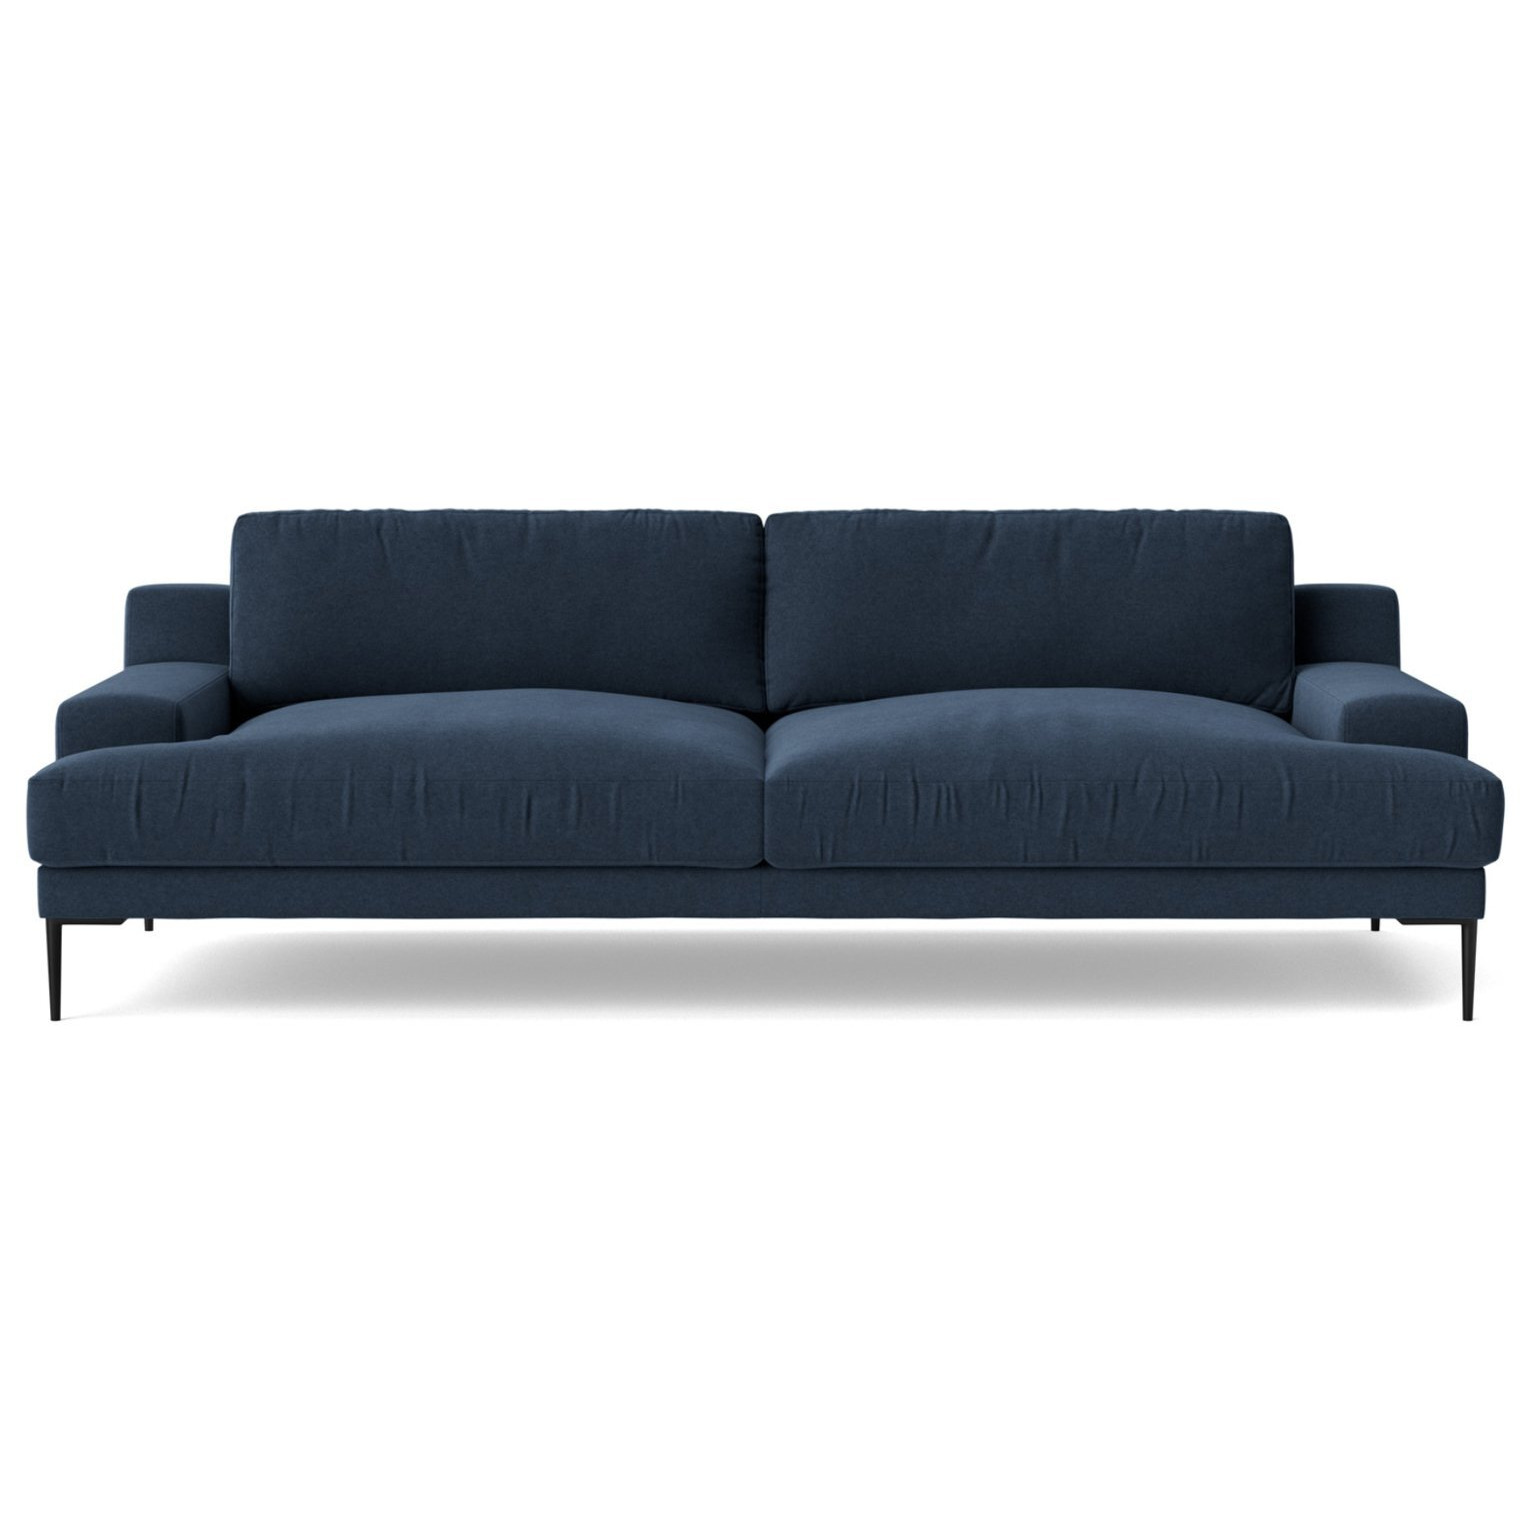 Swoon Almera Fabric 3 Seater Sofa - Indigo Blue - image 1